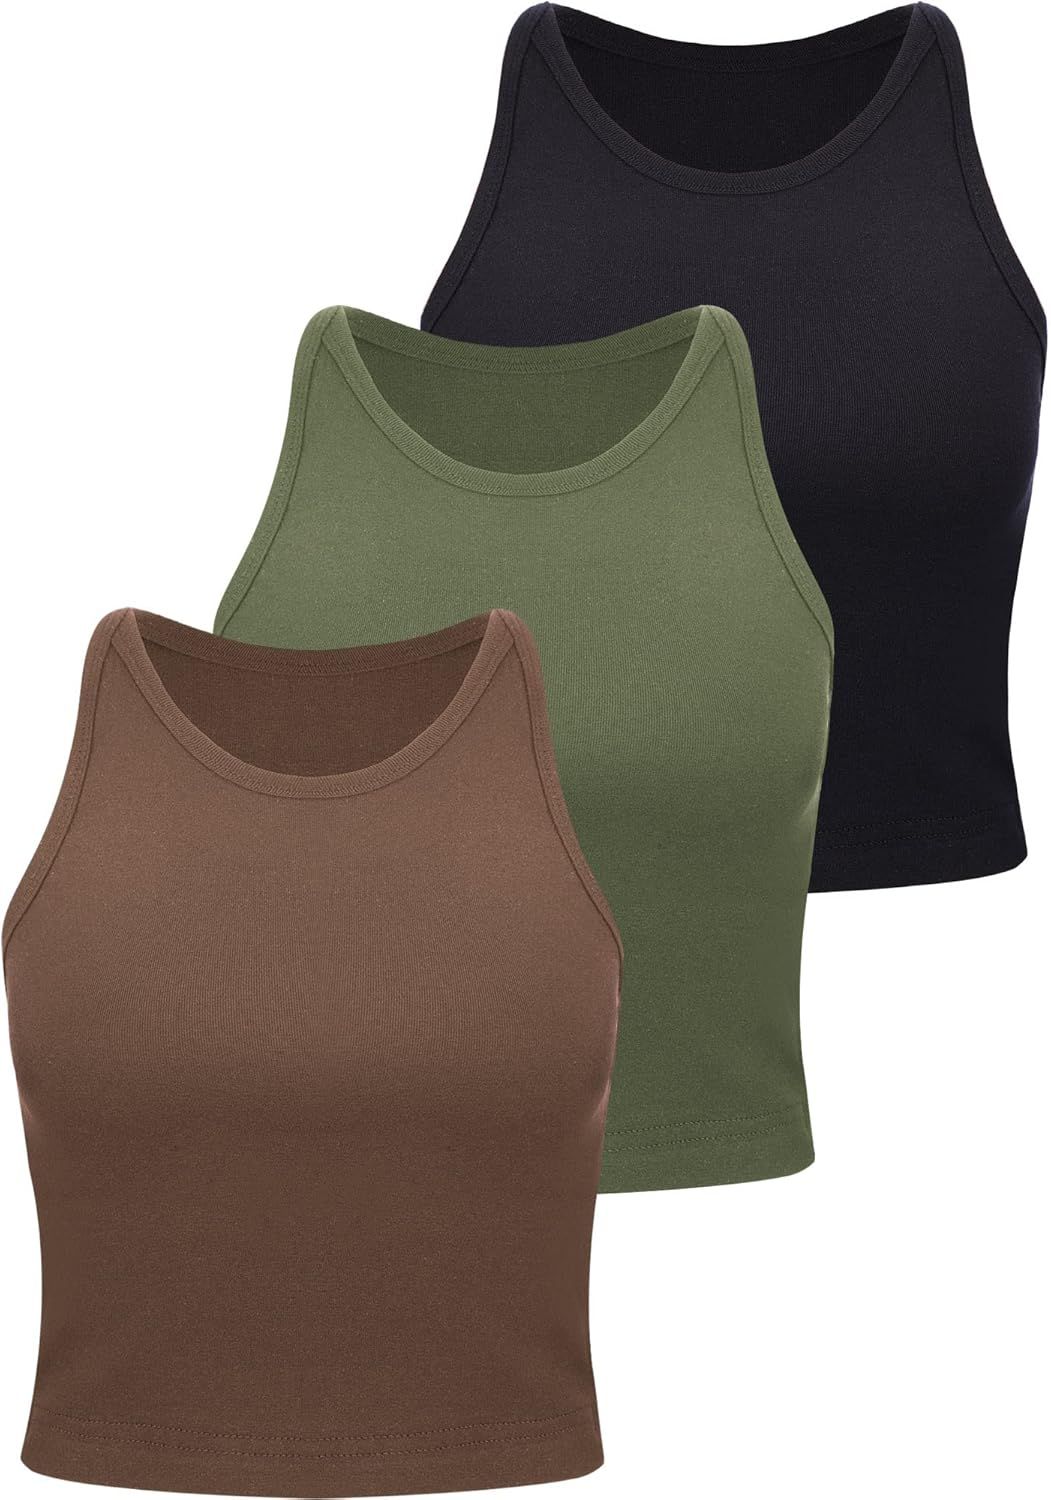 3 Pieces Crop Tops Racerback Crop for Women Crop Tank Workout Tops Cotton Basic Sports Crop for L... | Amazon (US)